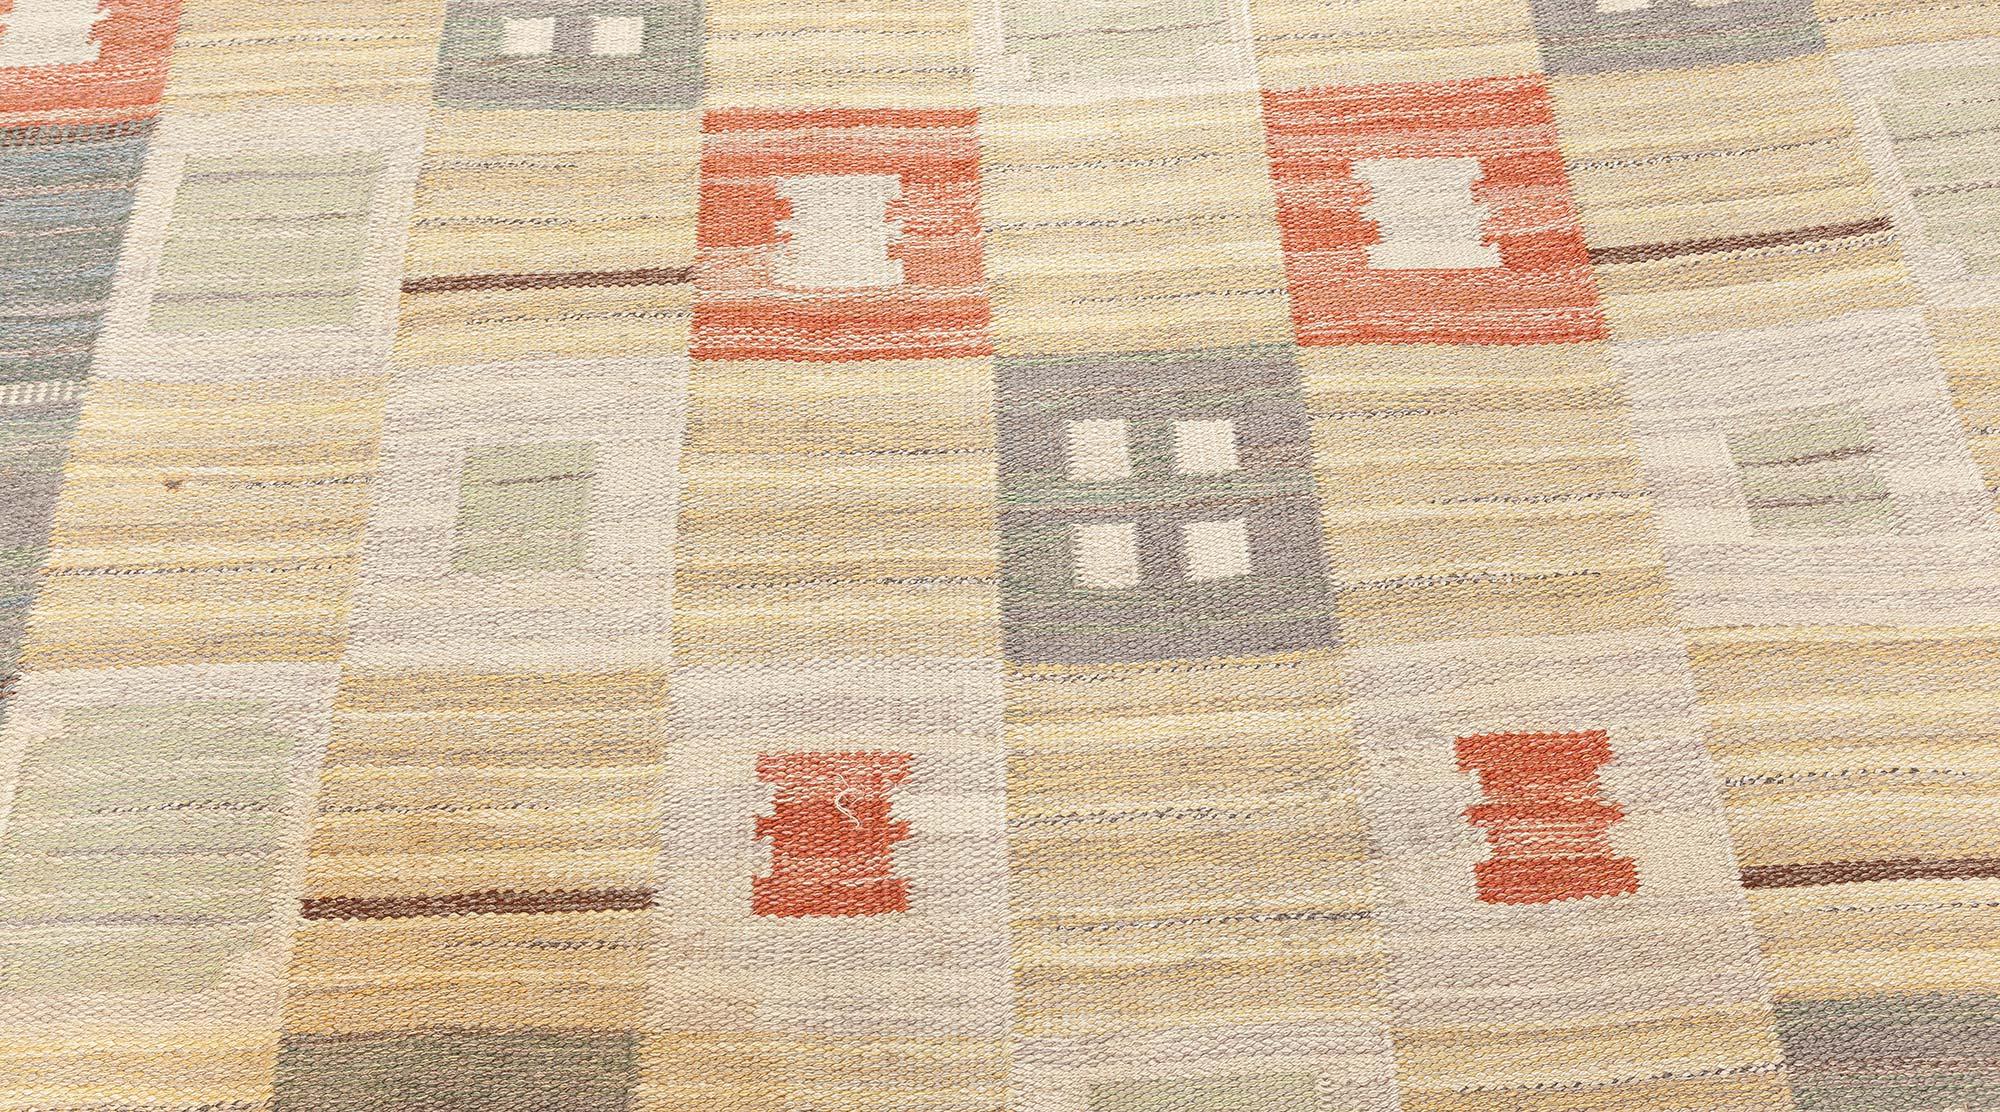 Swedish flat weave rug by Carl Dangel (CD)
Size: 6'5